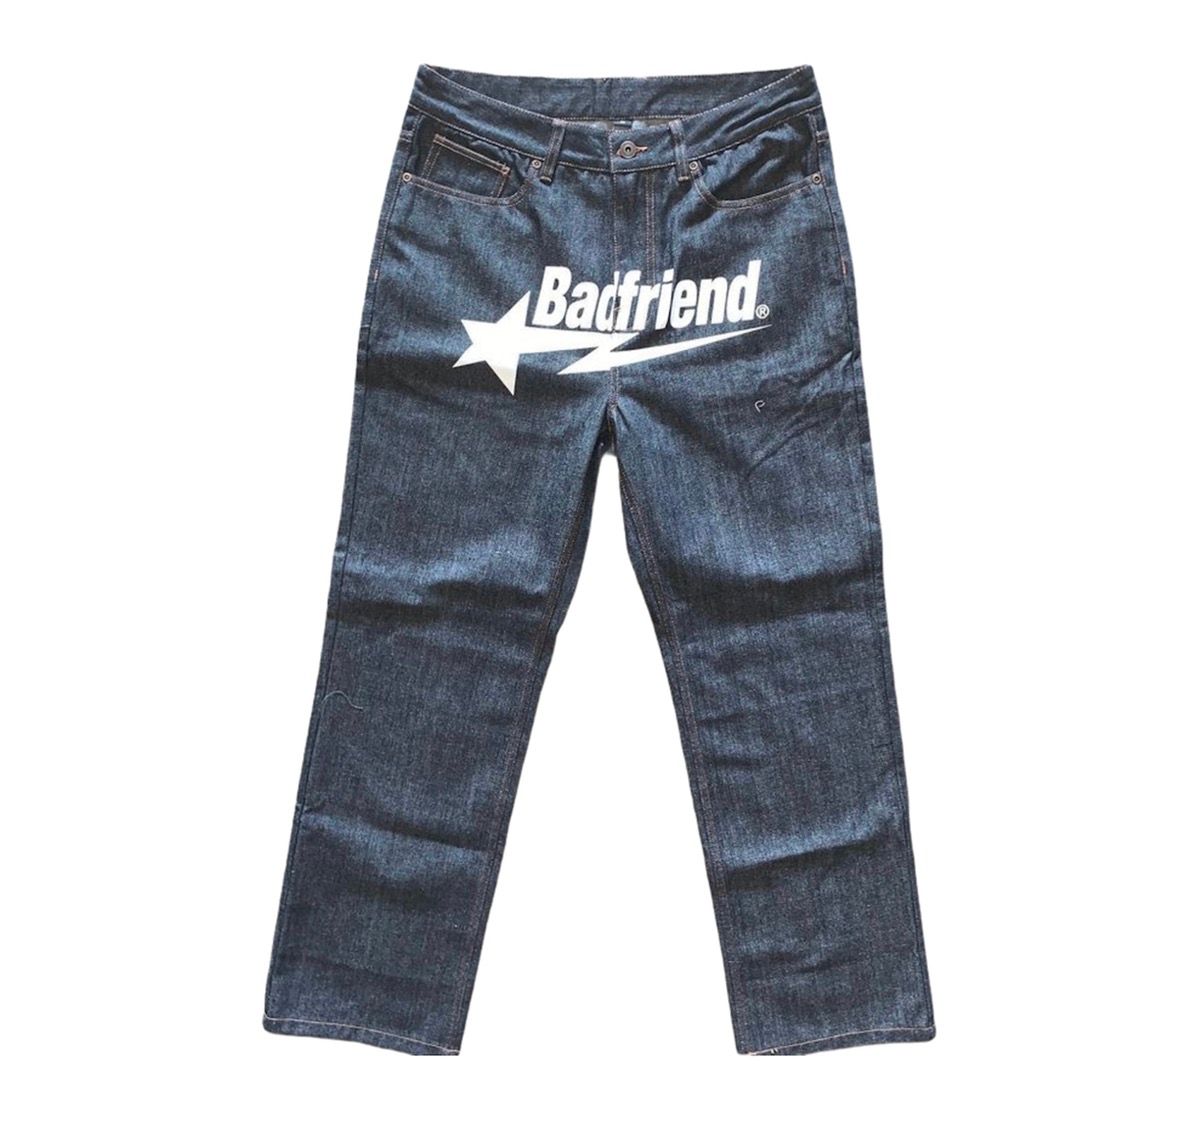 Badfriend Badfriend Star Logo denim jeans Size US 32 / EU 48 - 1 Preview